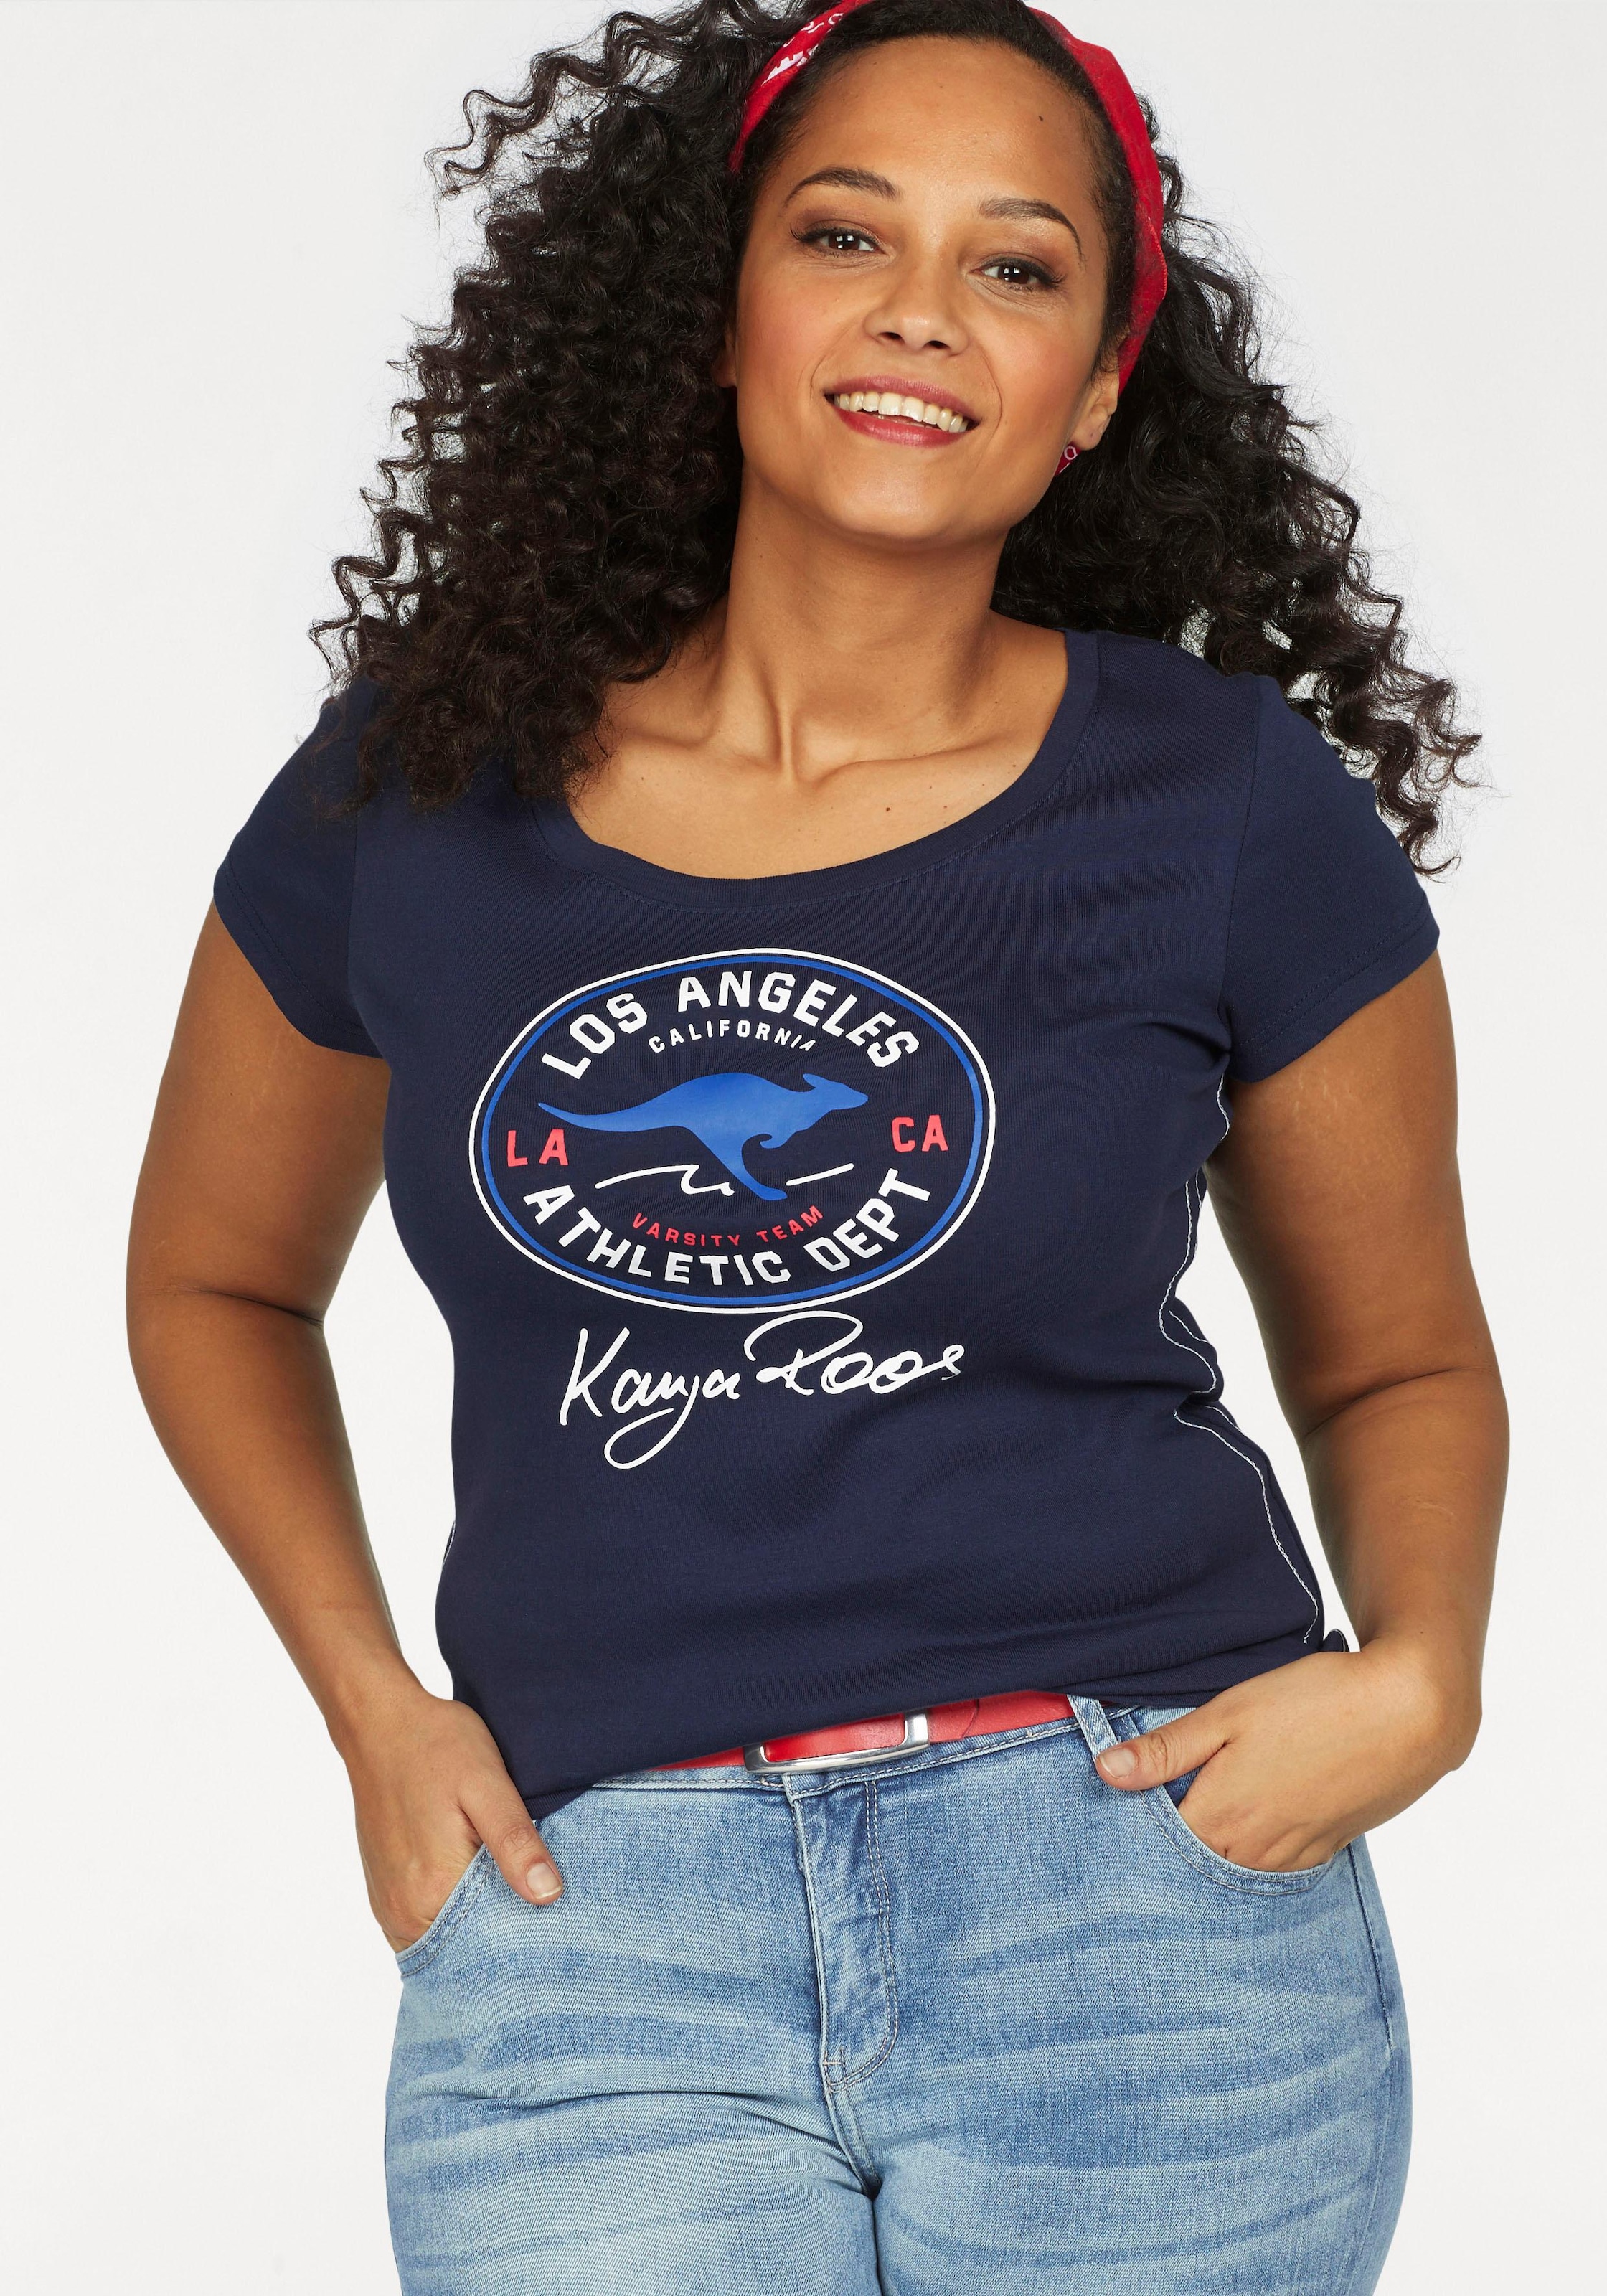 KangaROOS T-Shirt, mit großem Retro Label-Druck vorne